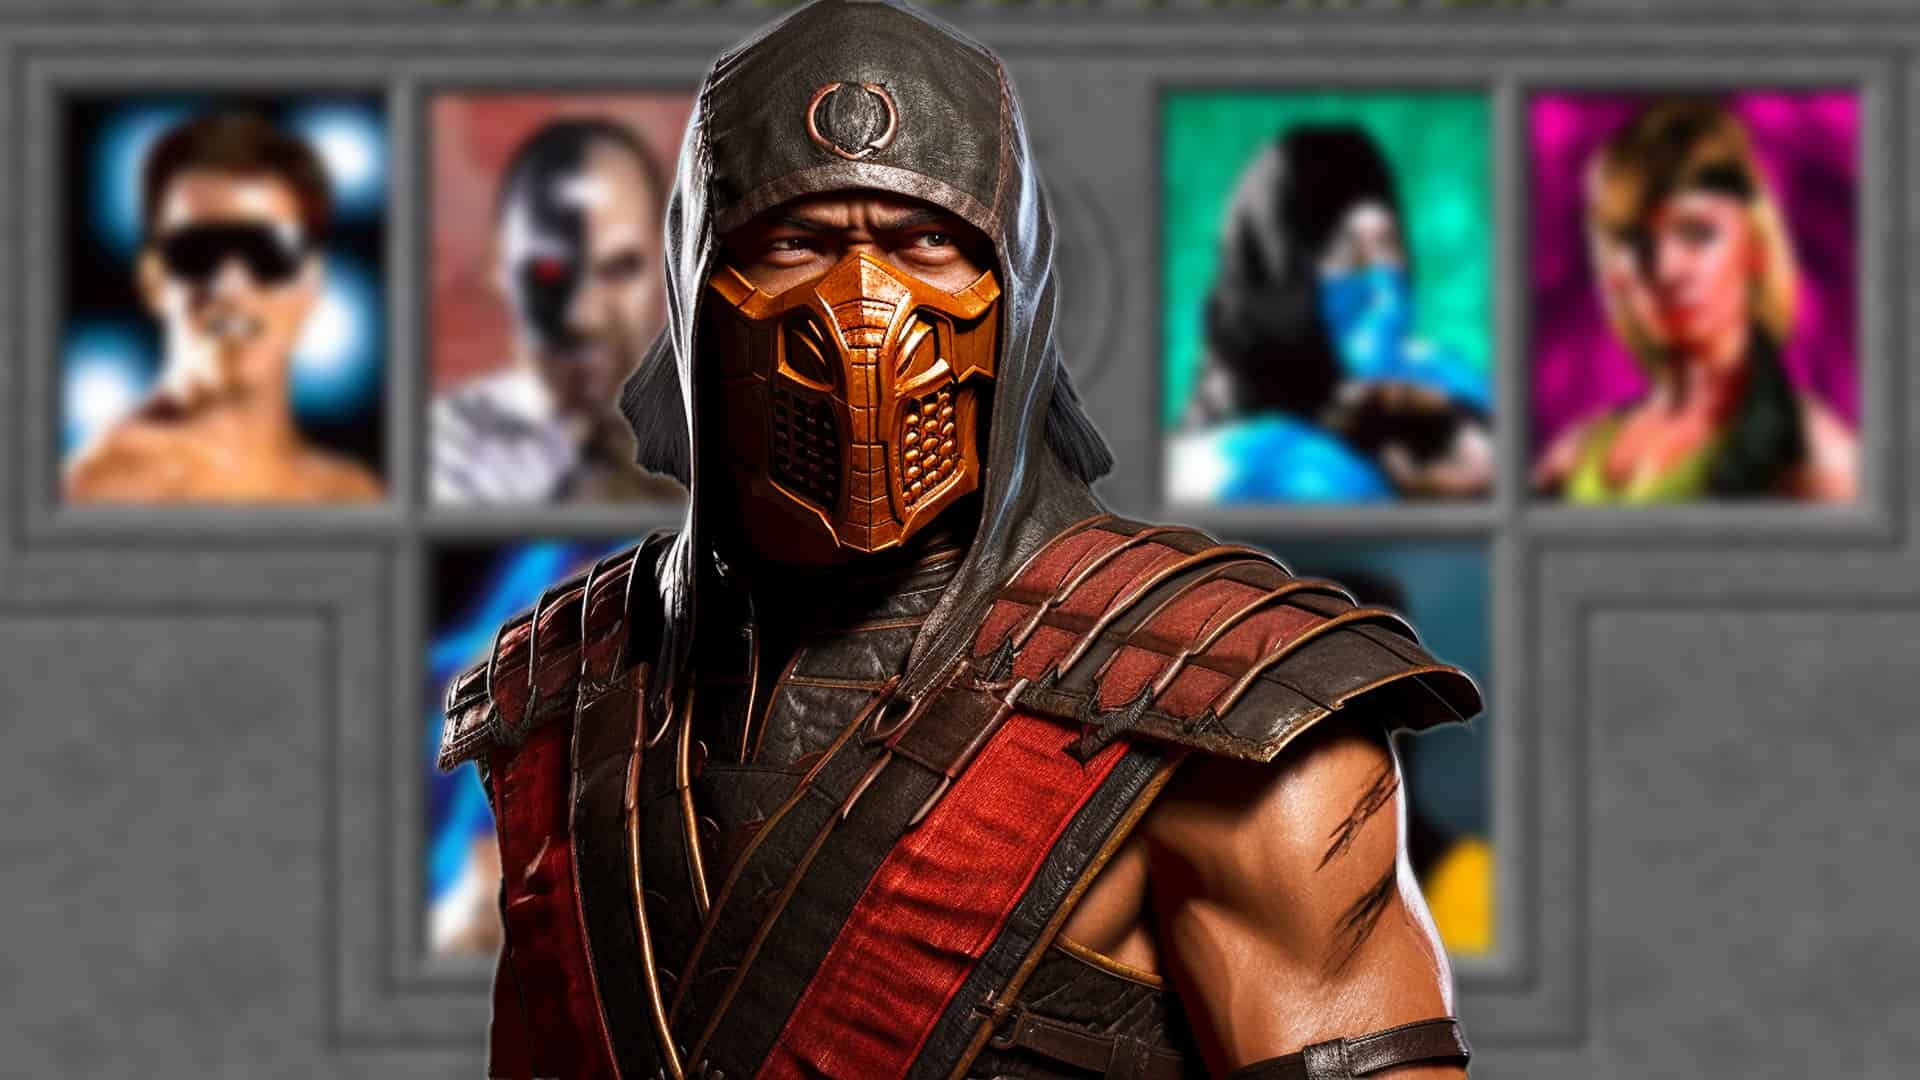 Jogo Mortal Kombat 1 para Nintendo Switch no Paraguai - Atacado Games -  Paraguay